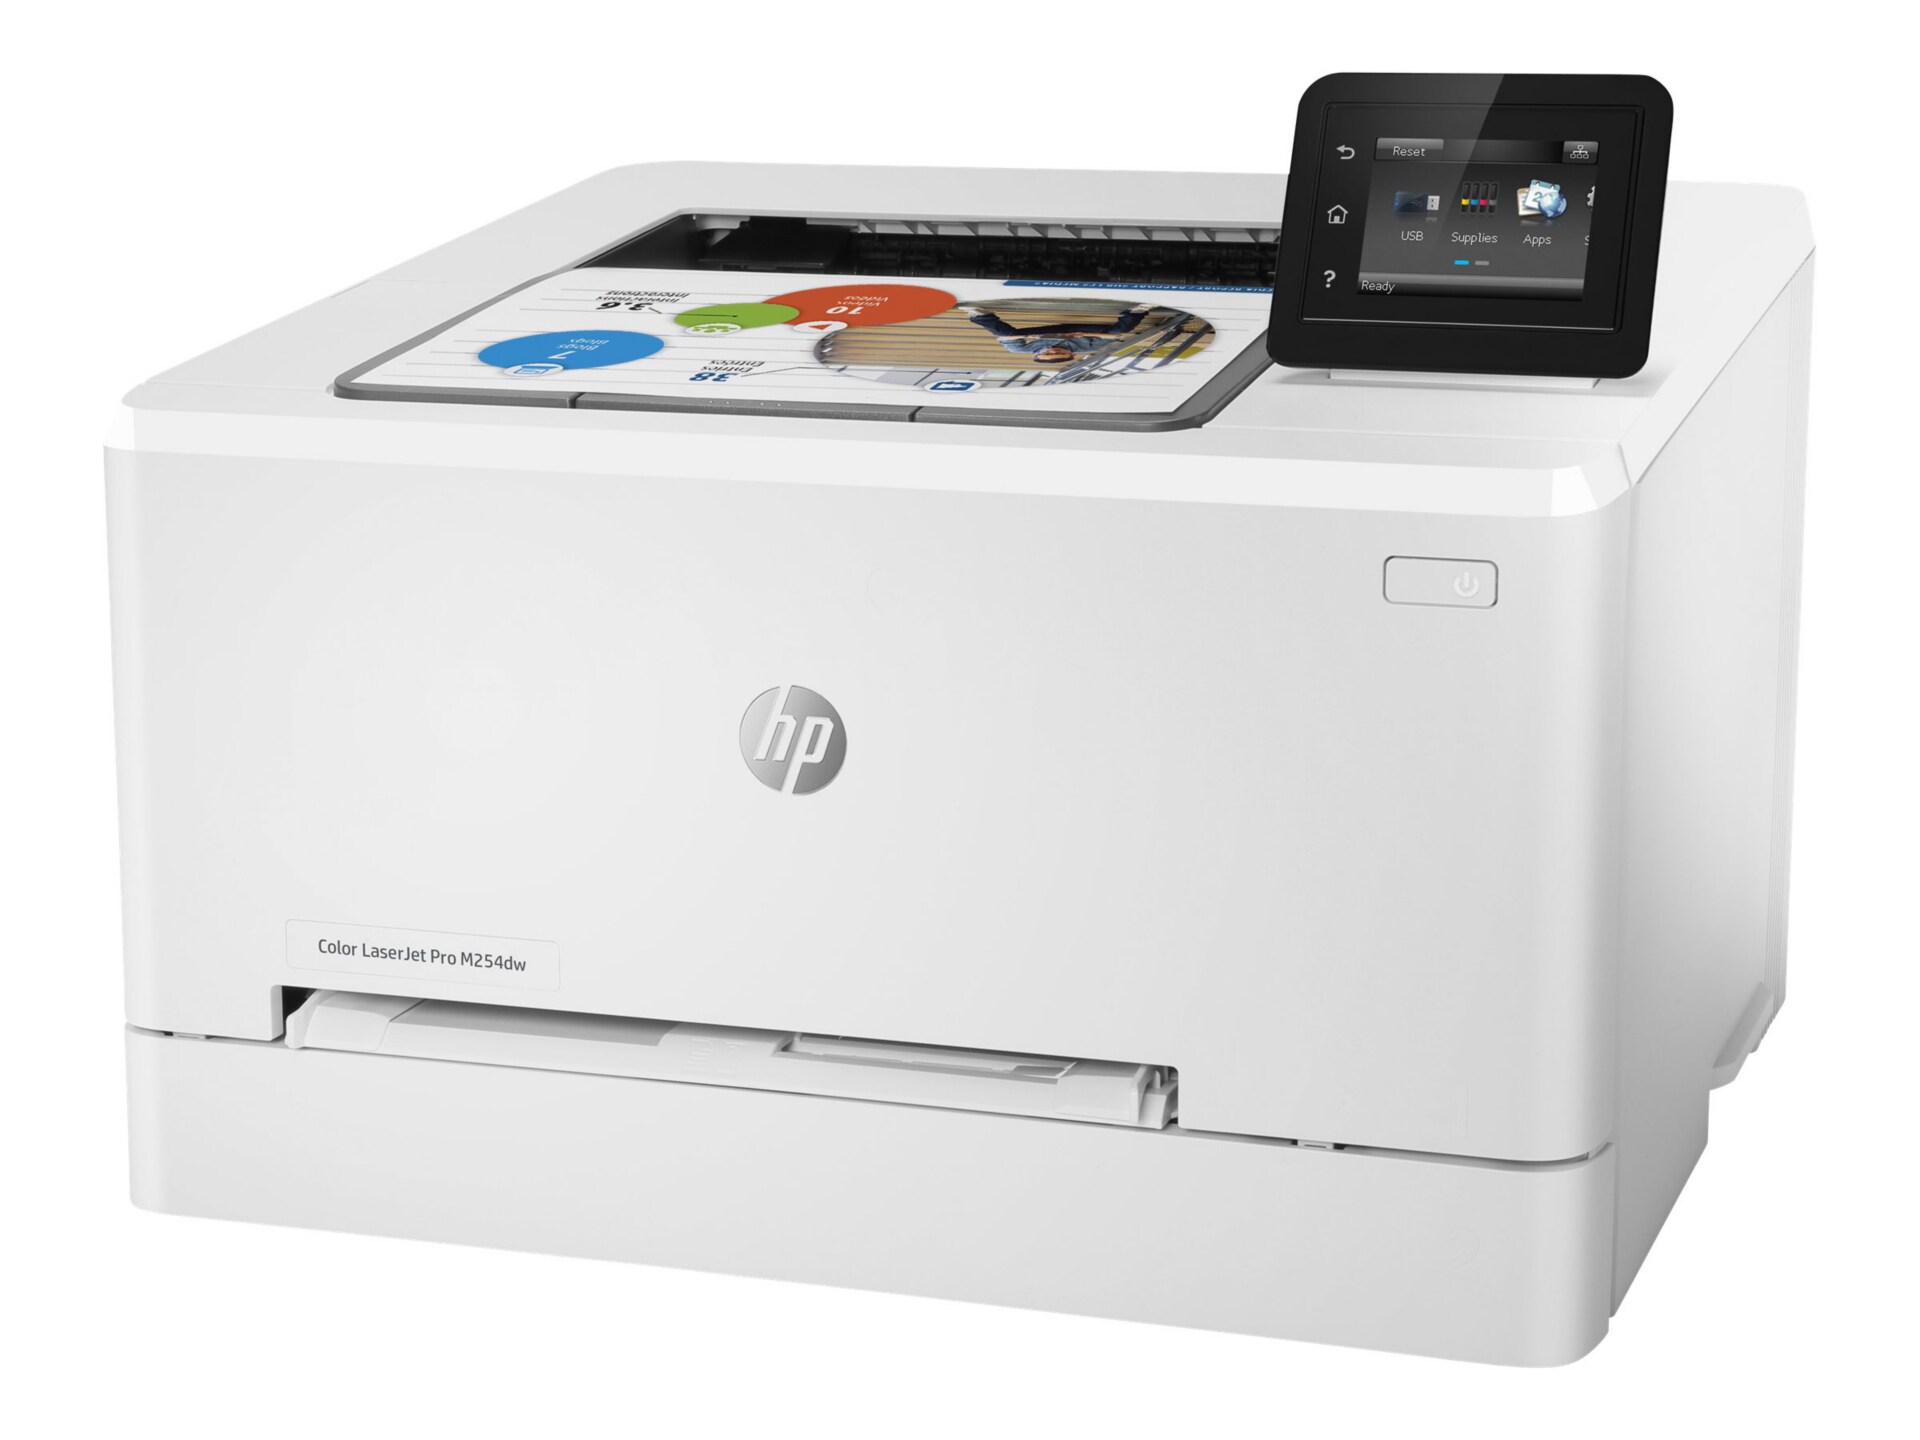 HP Color LaserJet Pro M254dw ($299-$50 savings=$249, 12/29)
